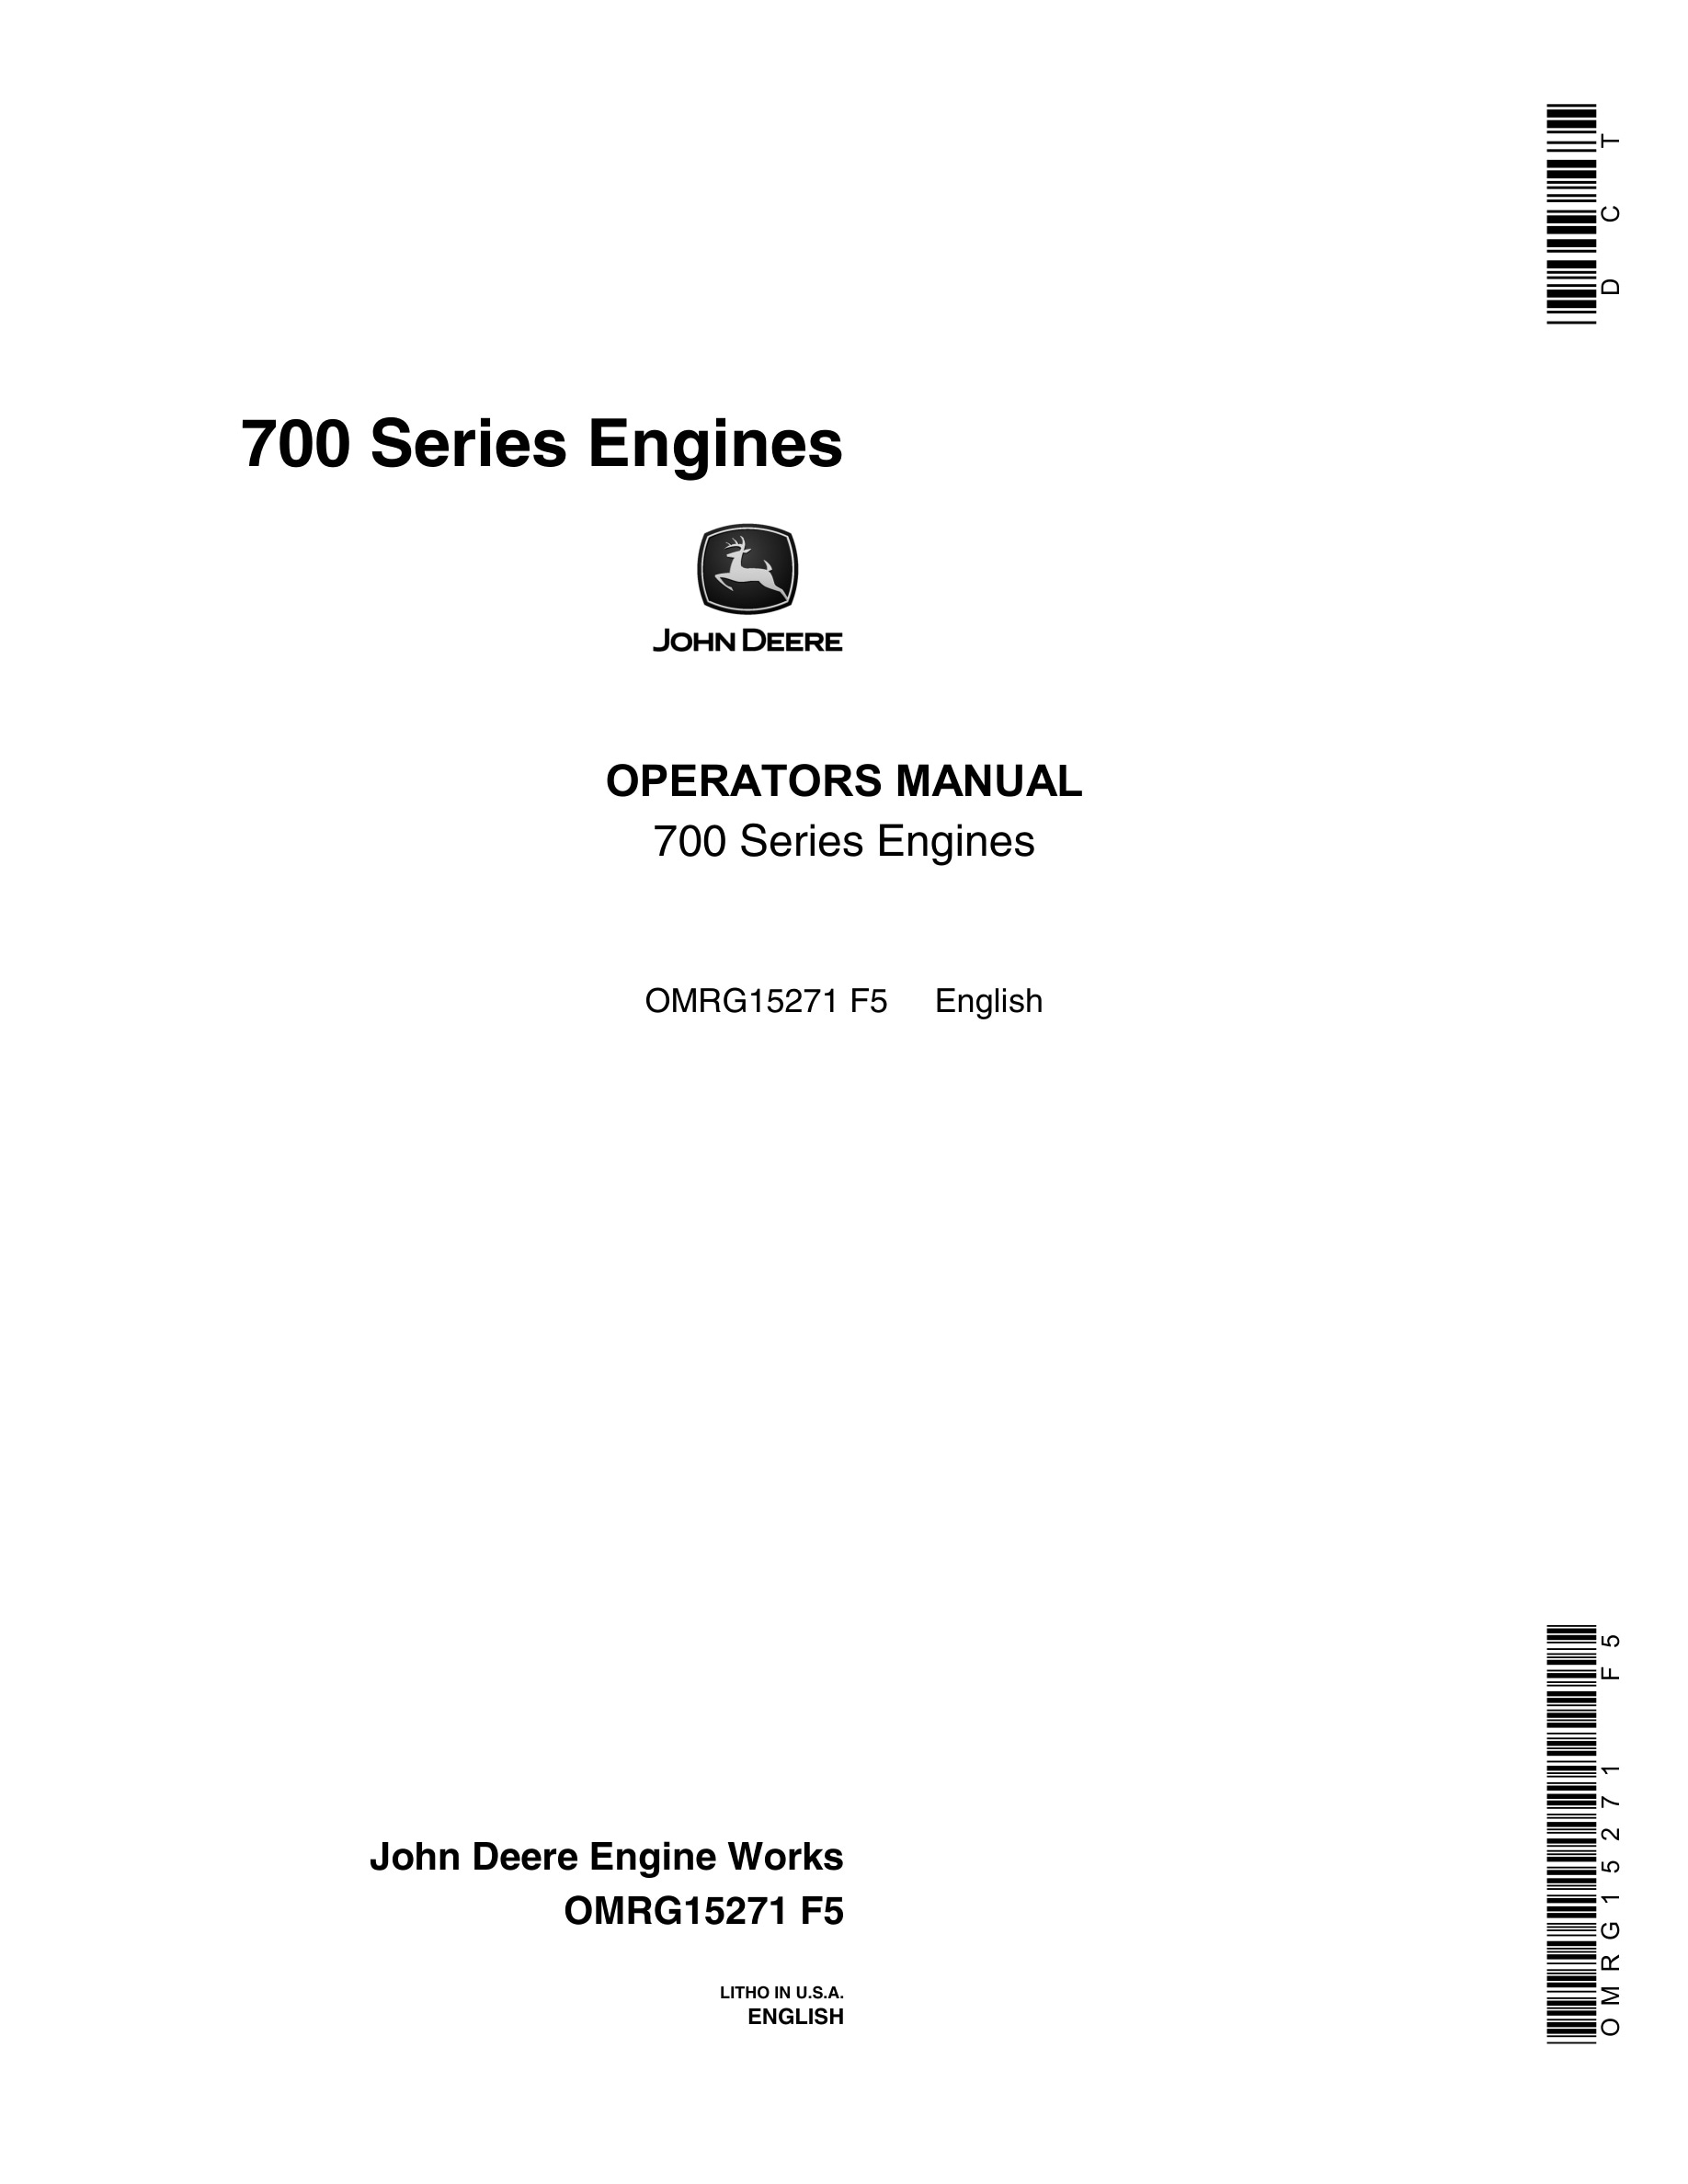 John Deere PowerTech 700 Series Engines Operator Manual OMRG15271-1